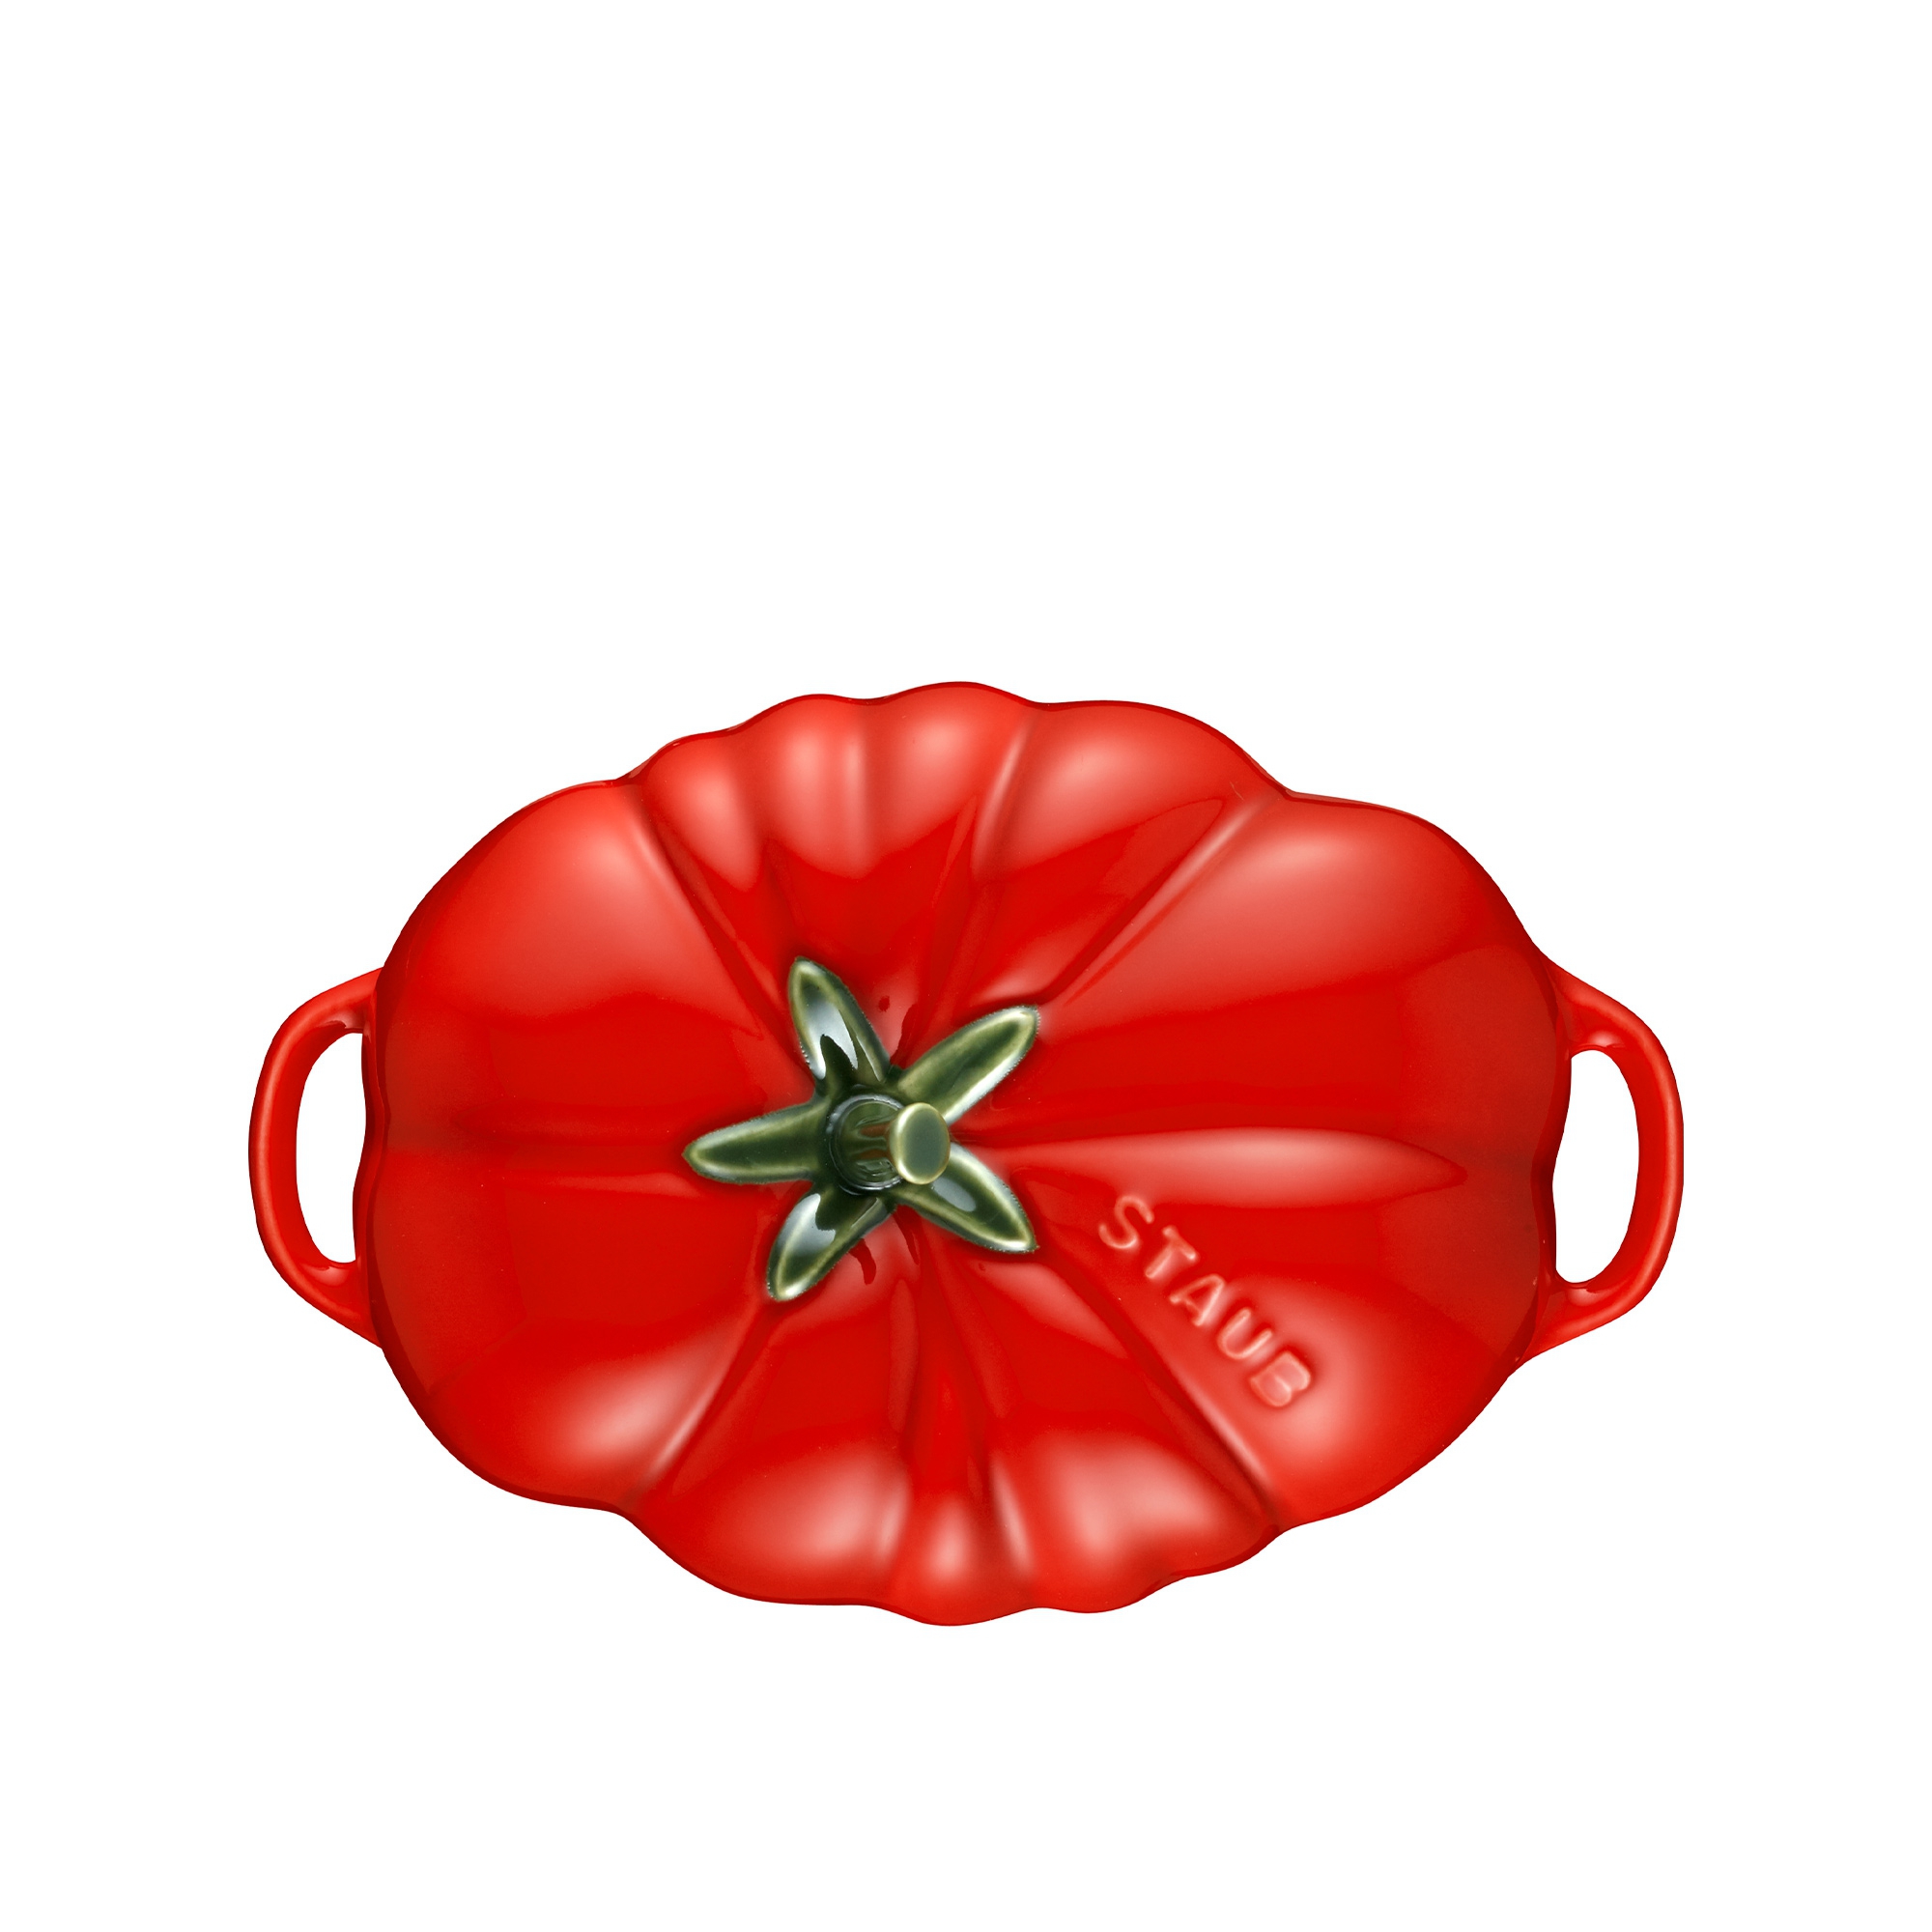 Staub - Ceramique Cocotte tomato - 16 cm - cherry red